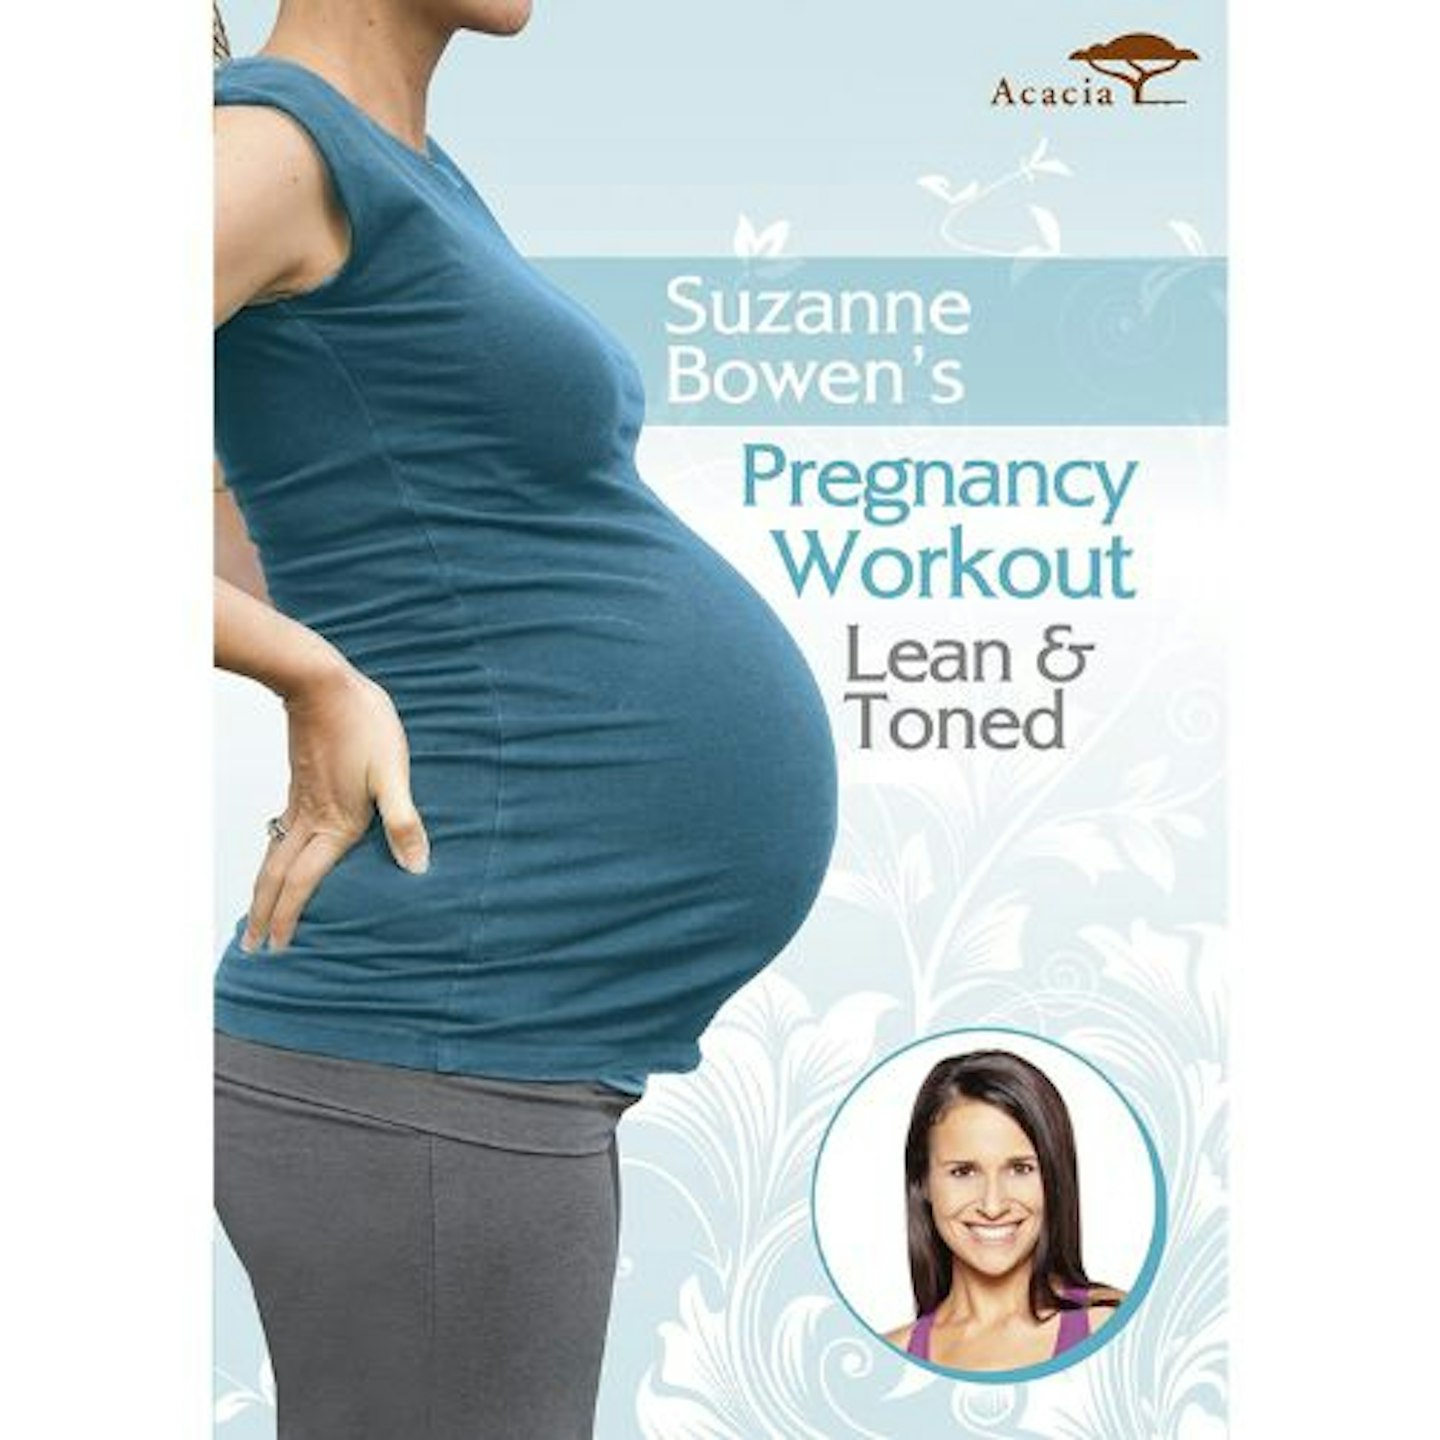 Suzanne Bowen’s Pregnancy Workout Lean & Toned